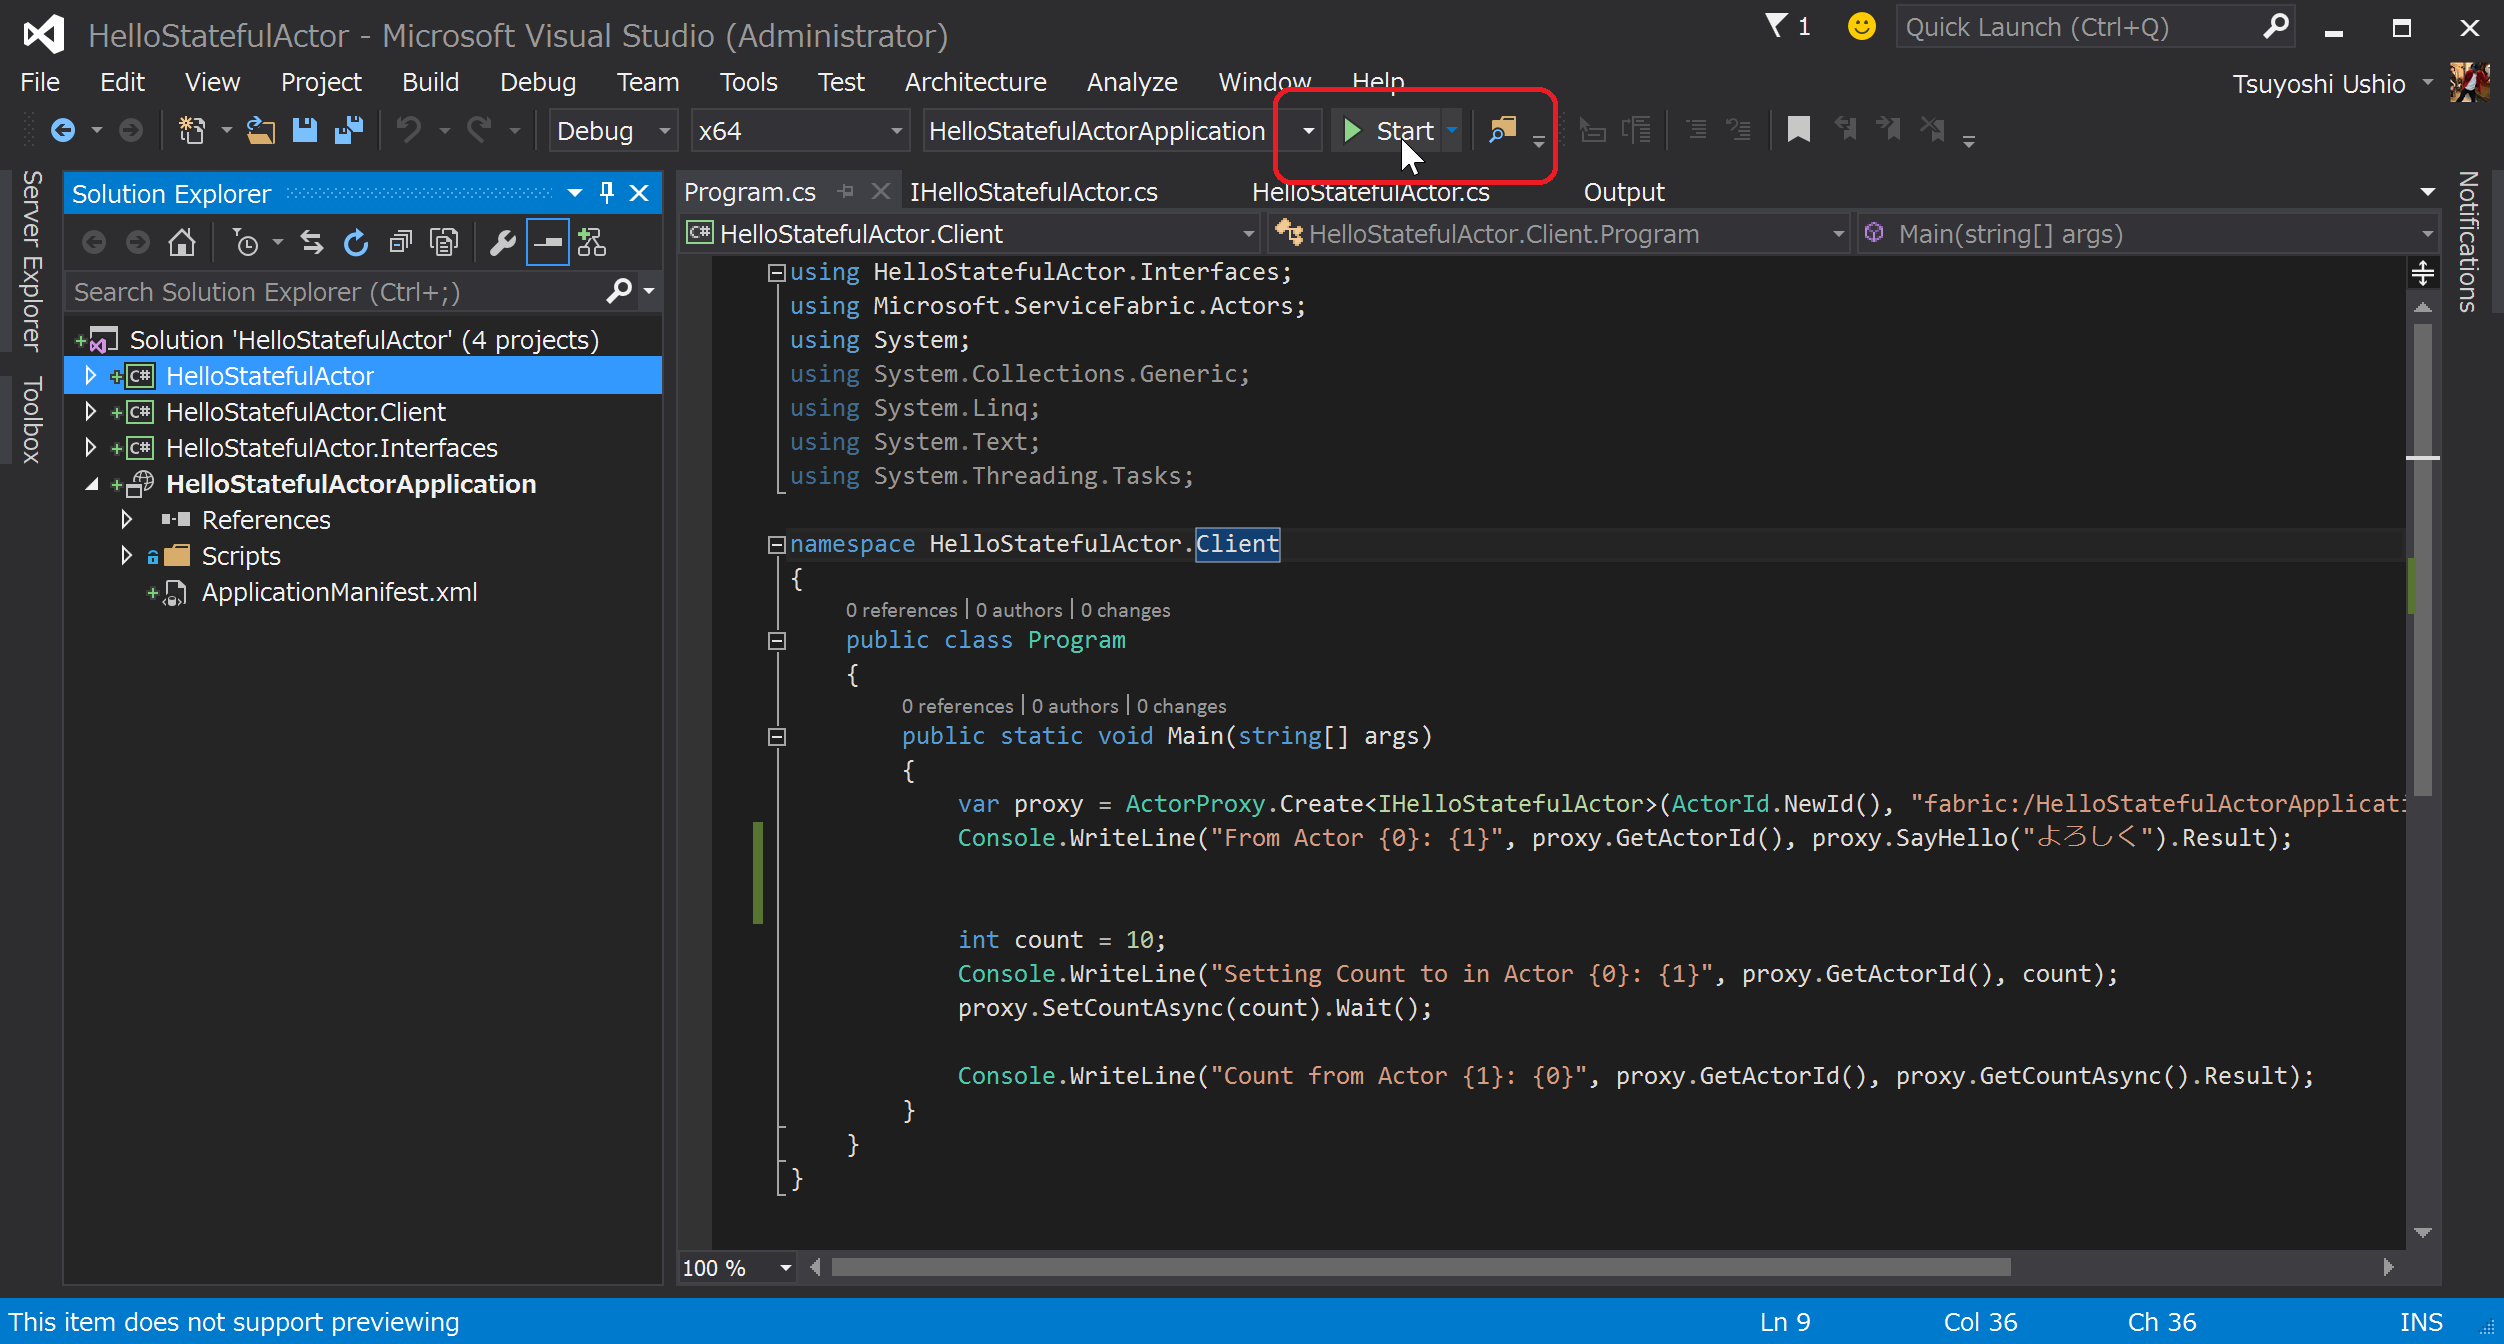 SnapCrab_HelloStatefulActor - Microsoft Visual Studio (Administrator)_2015-5-21_14-21-47_No-00.png